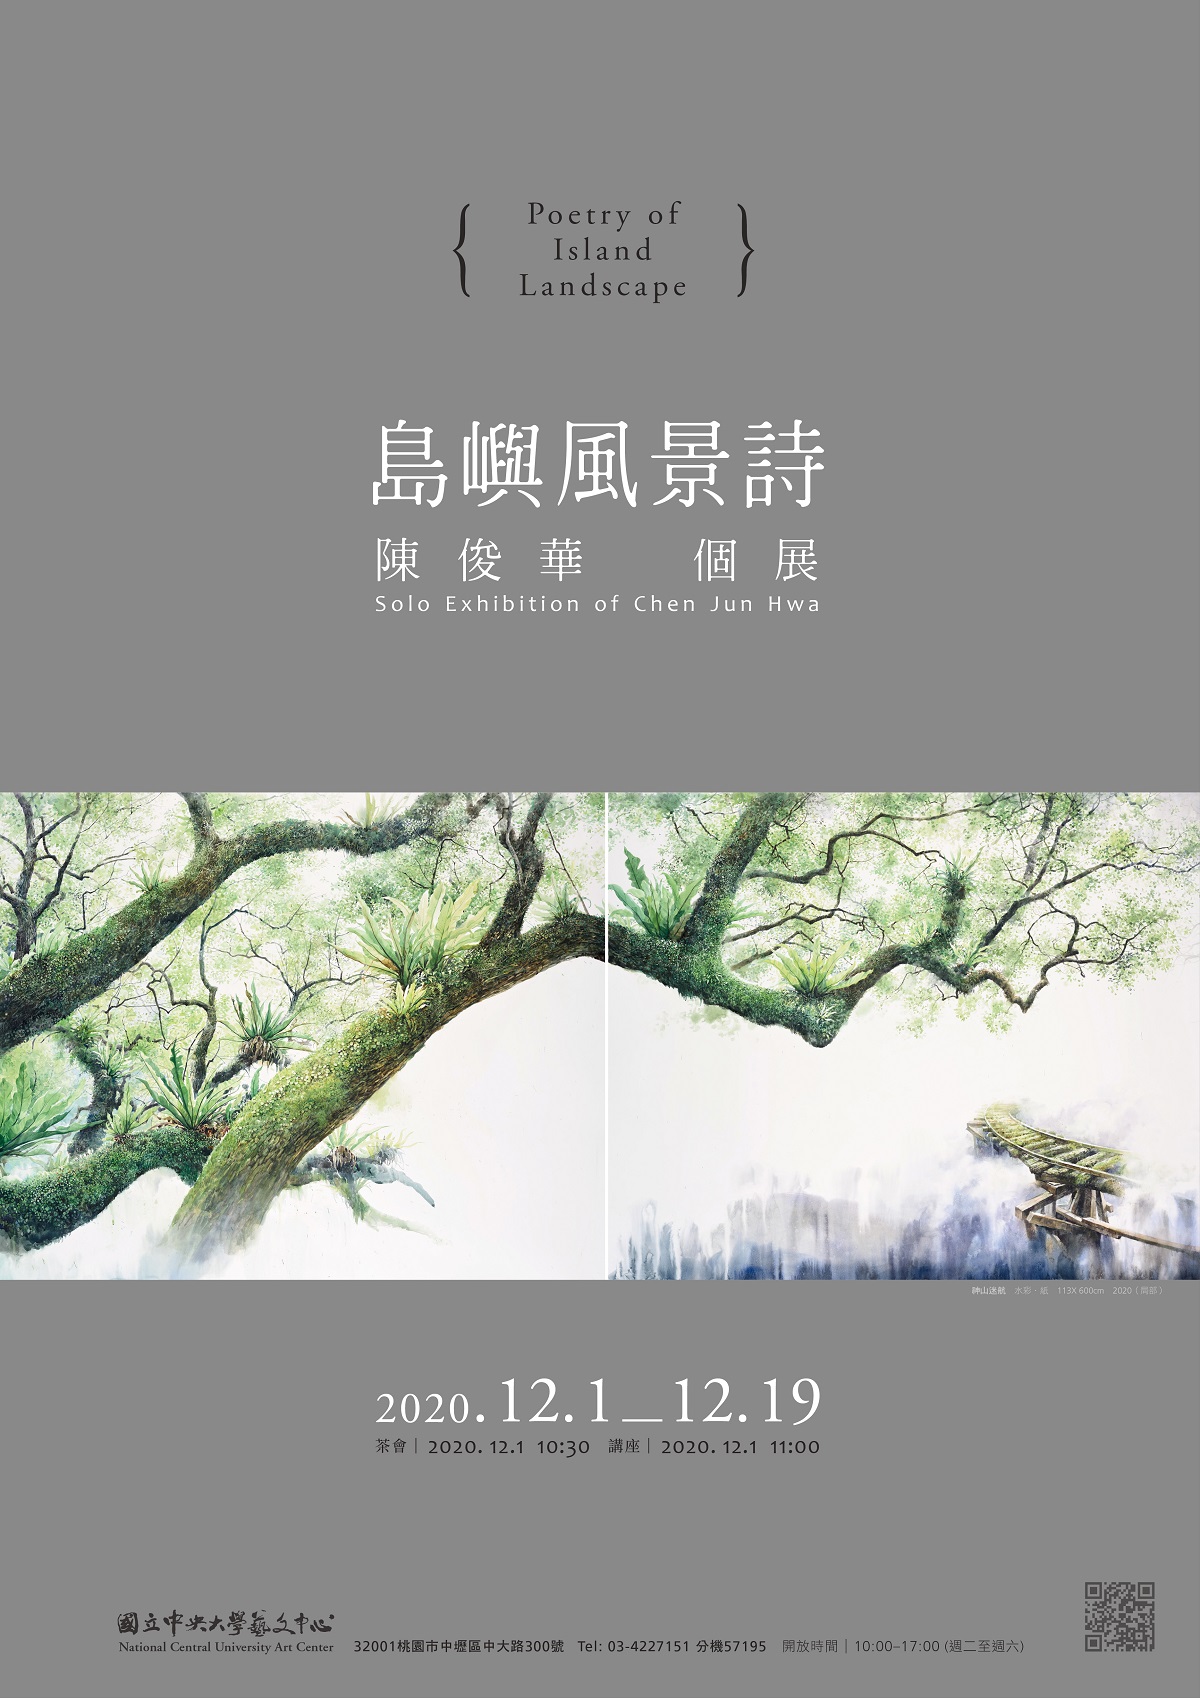 Poetry of Island Landscape - Solo Exhibition of Chen Jun Hwa